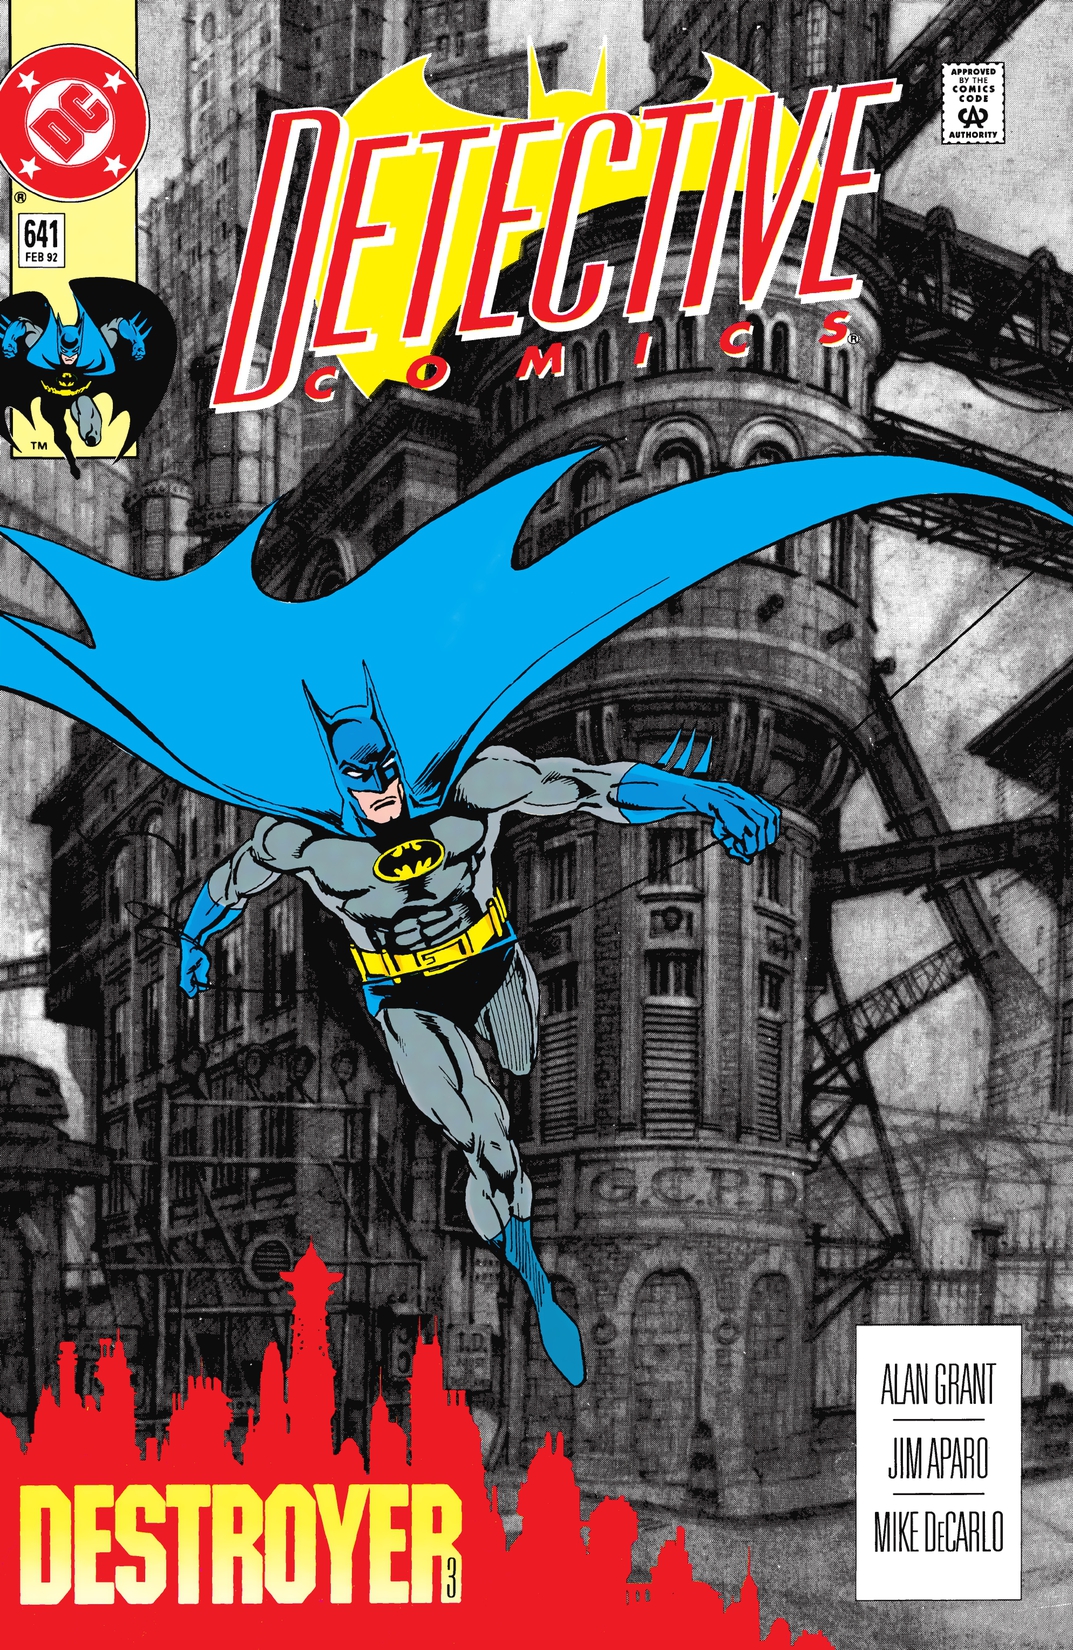 Detective Comics (1937-2011) #641 preview images